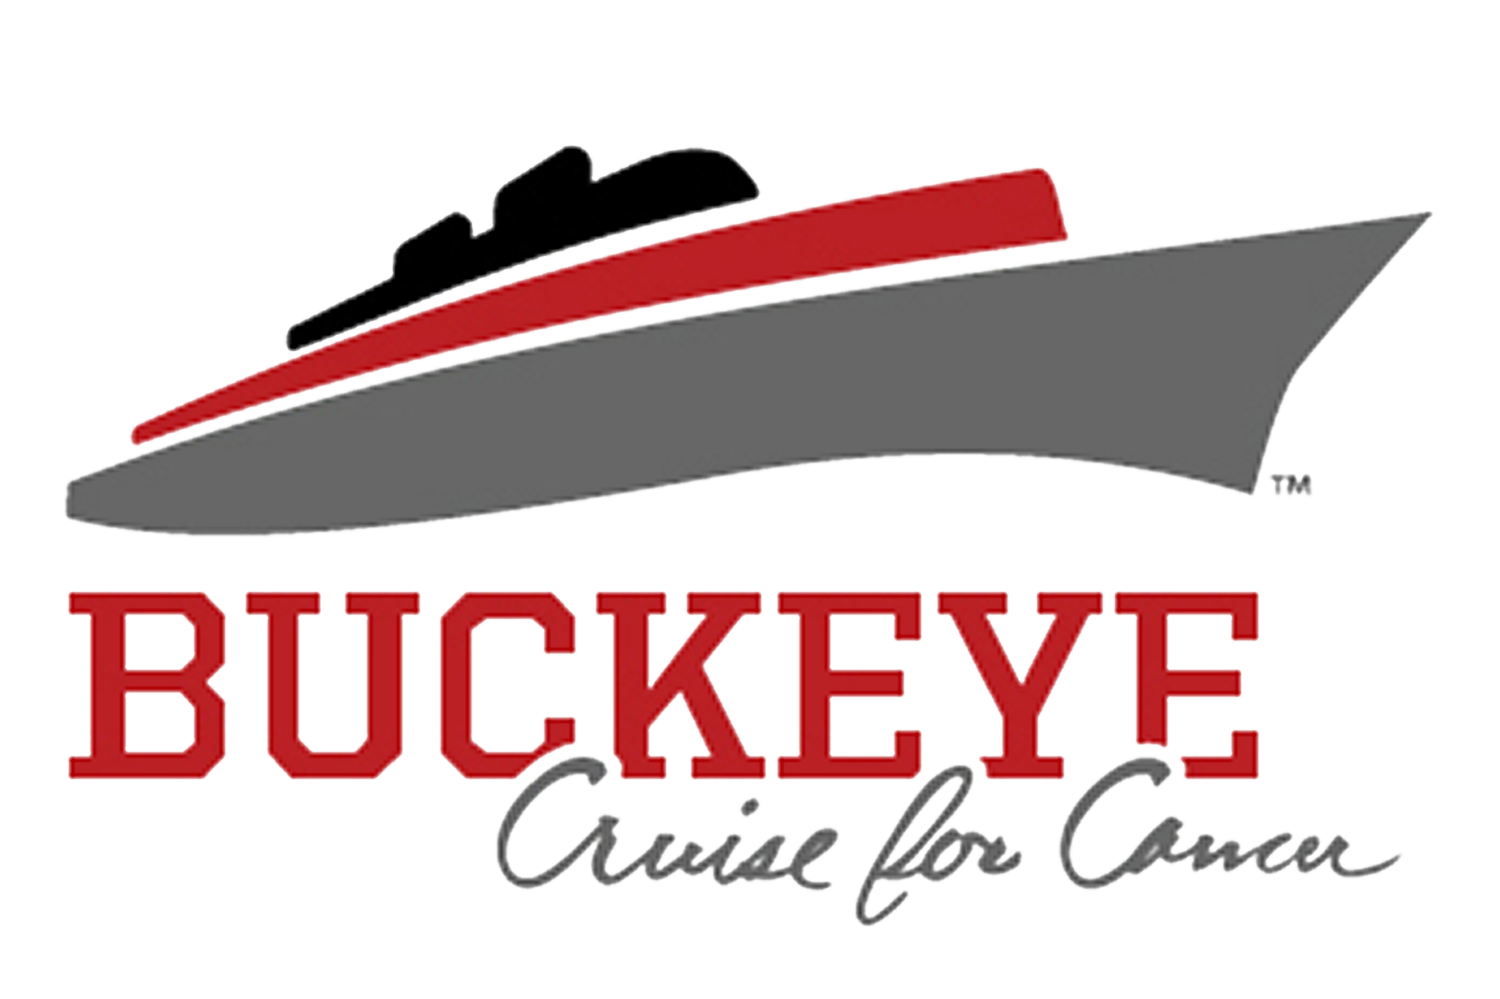 buckeye cruise for cancer the ohio eggfest logo sponsor